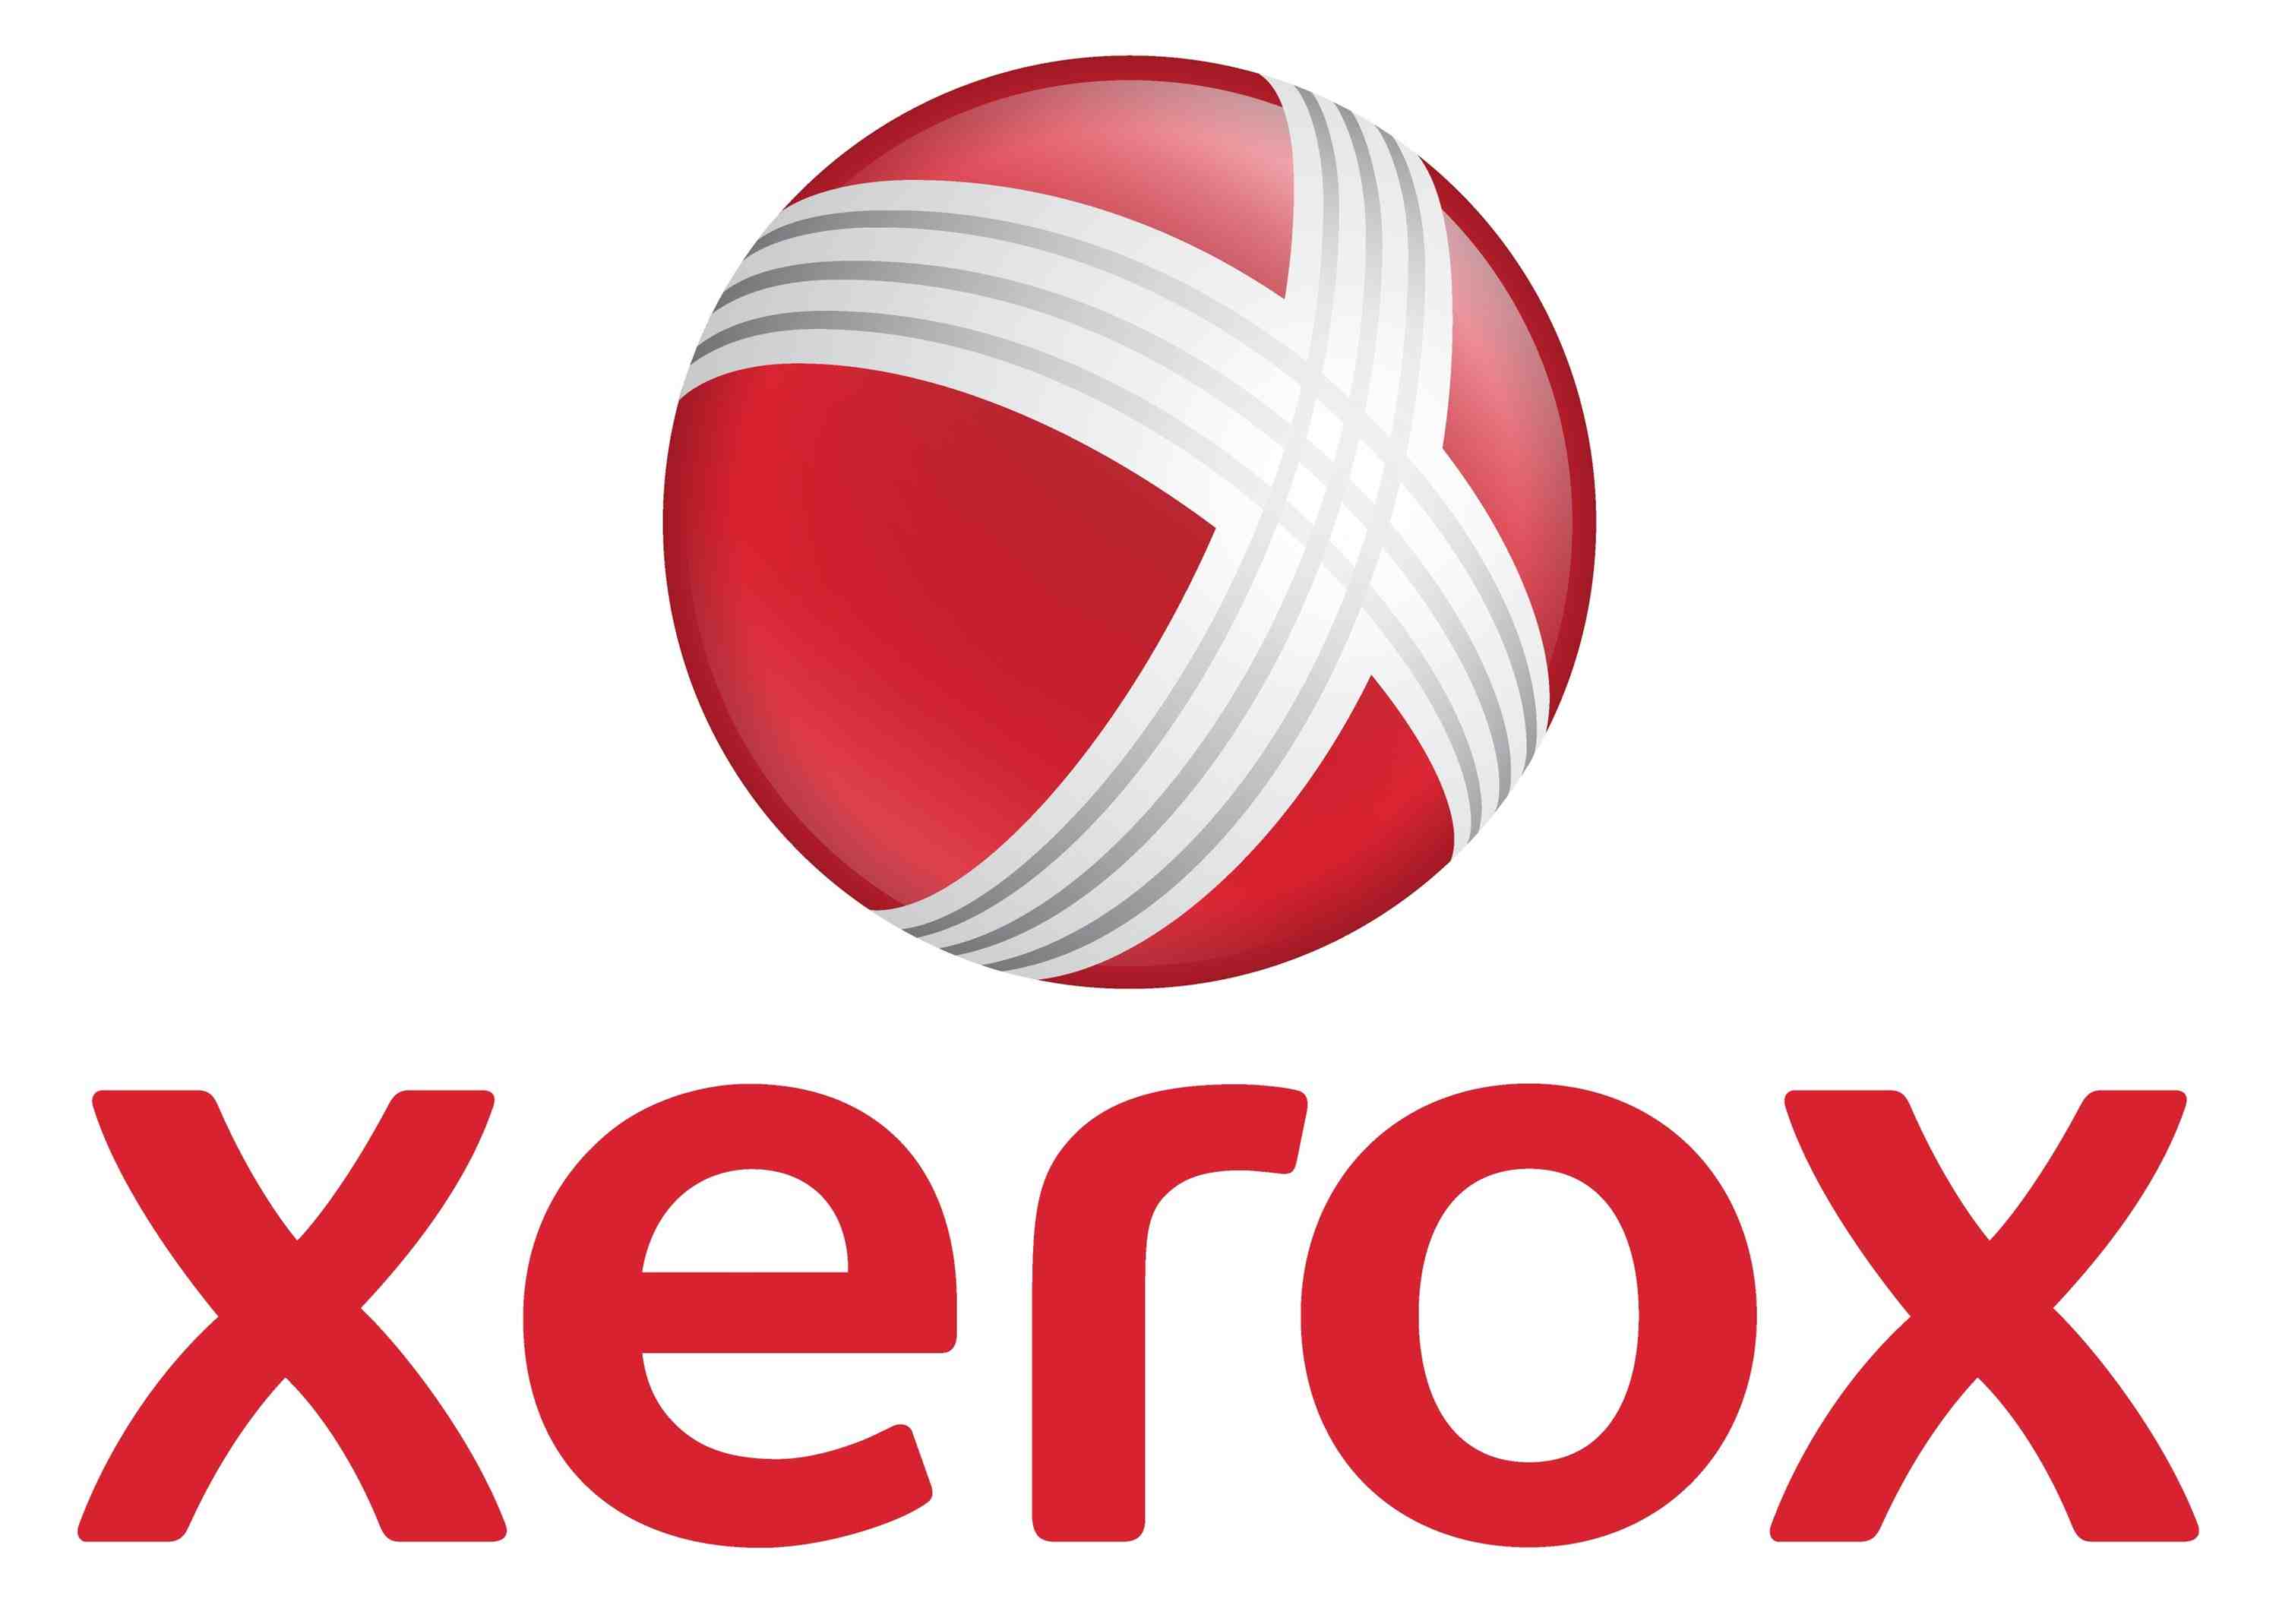 xerox logo wallpaper